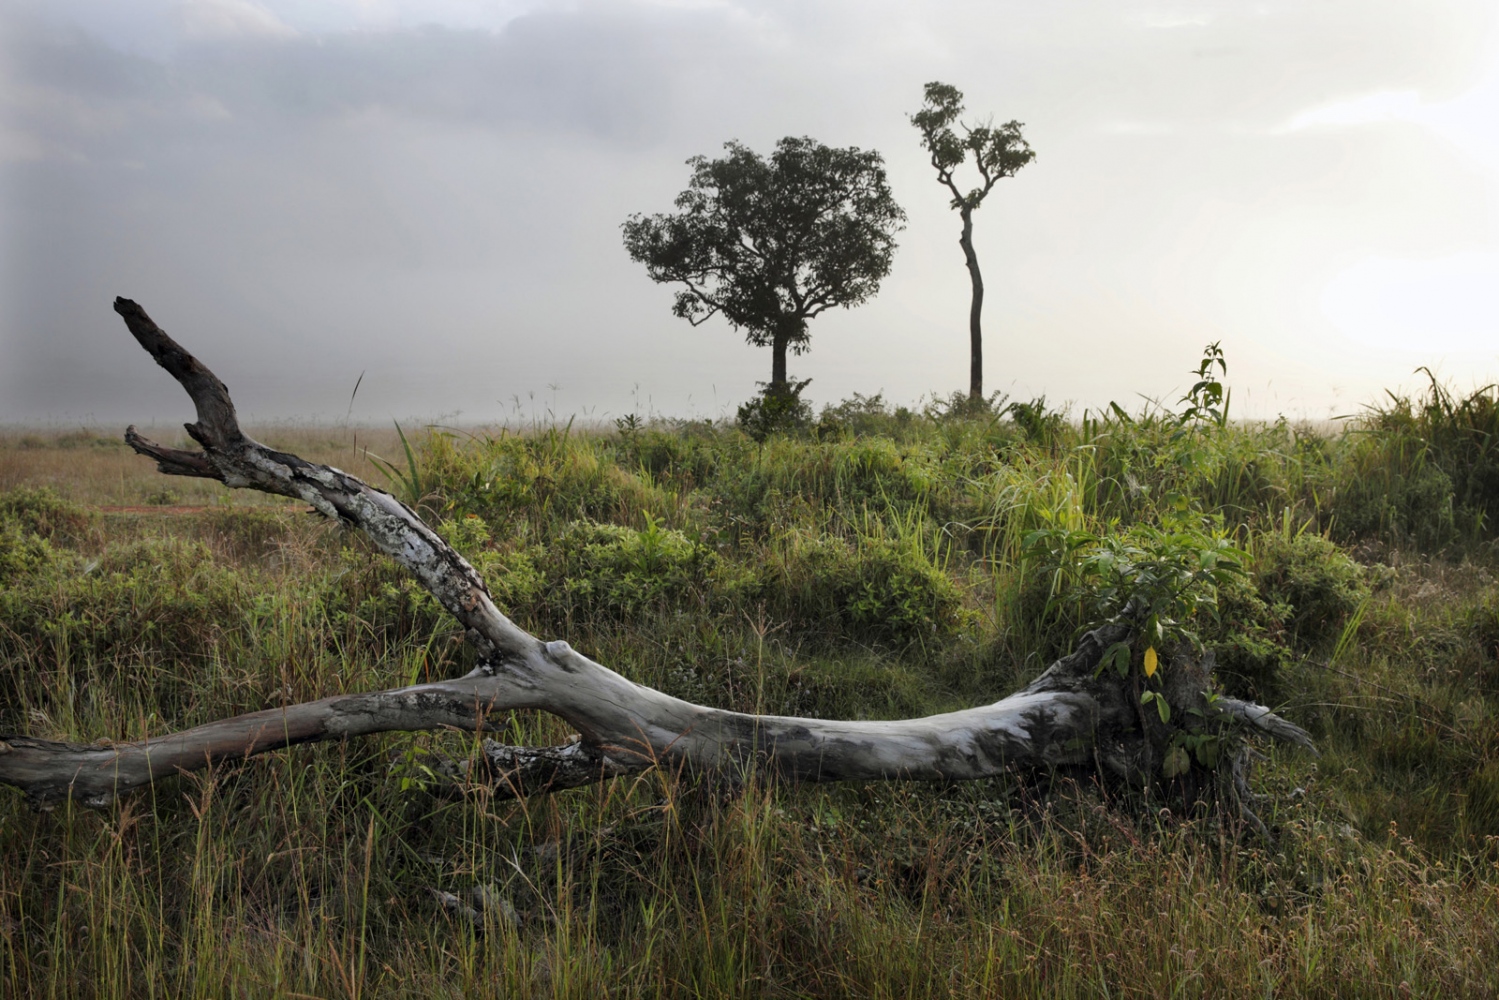 CAMBODIA'S CARDAMOM FOREST